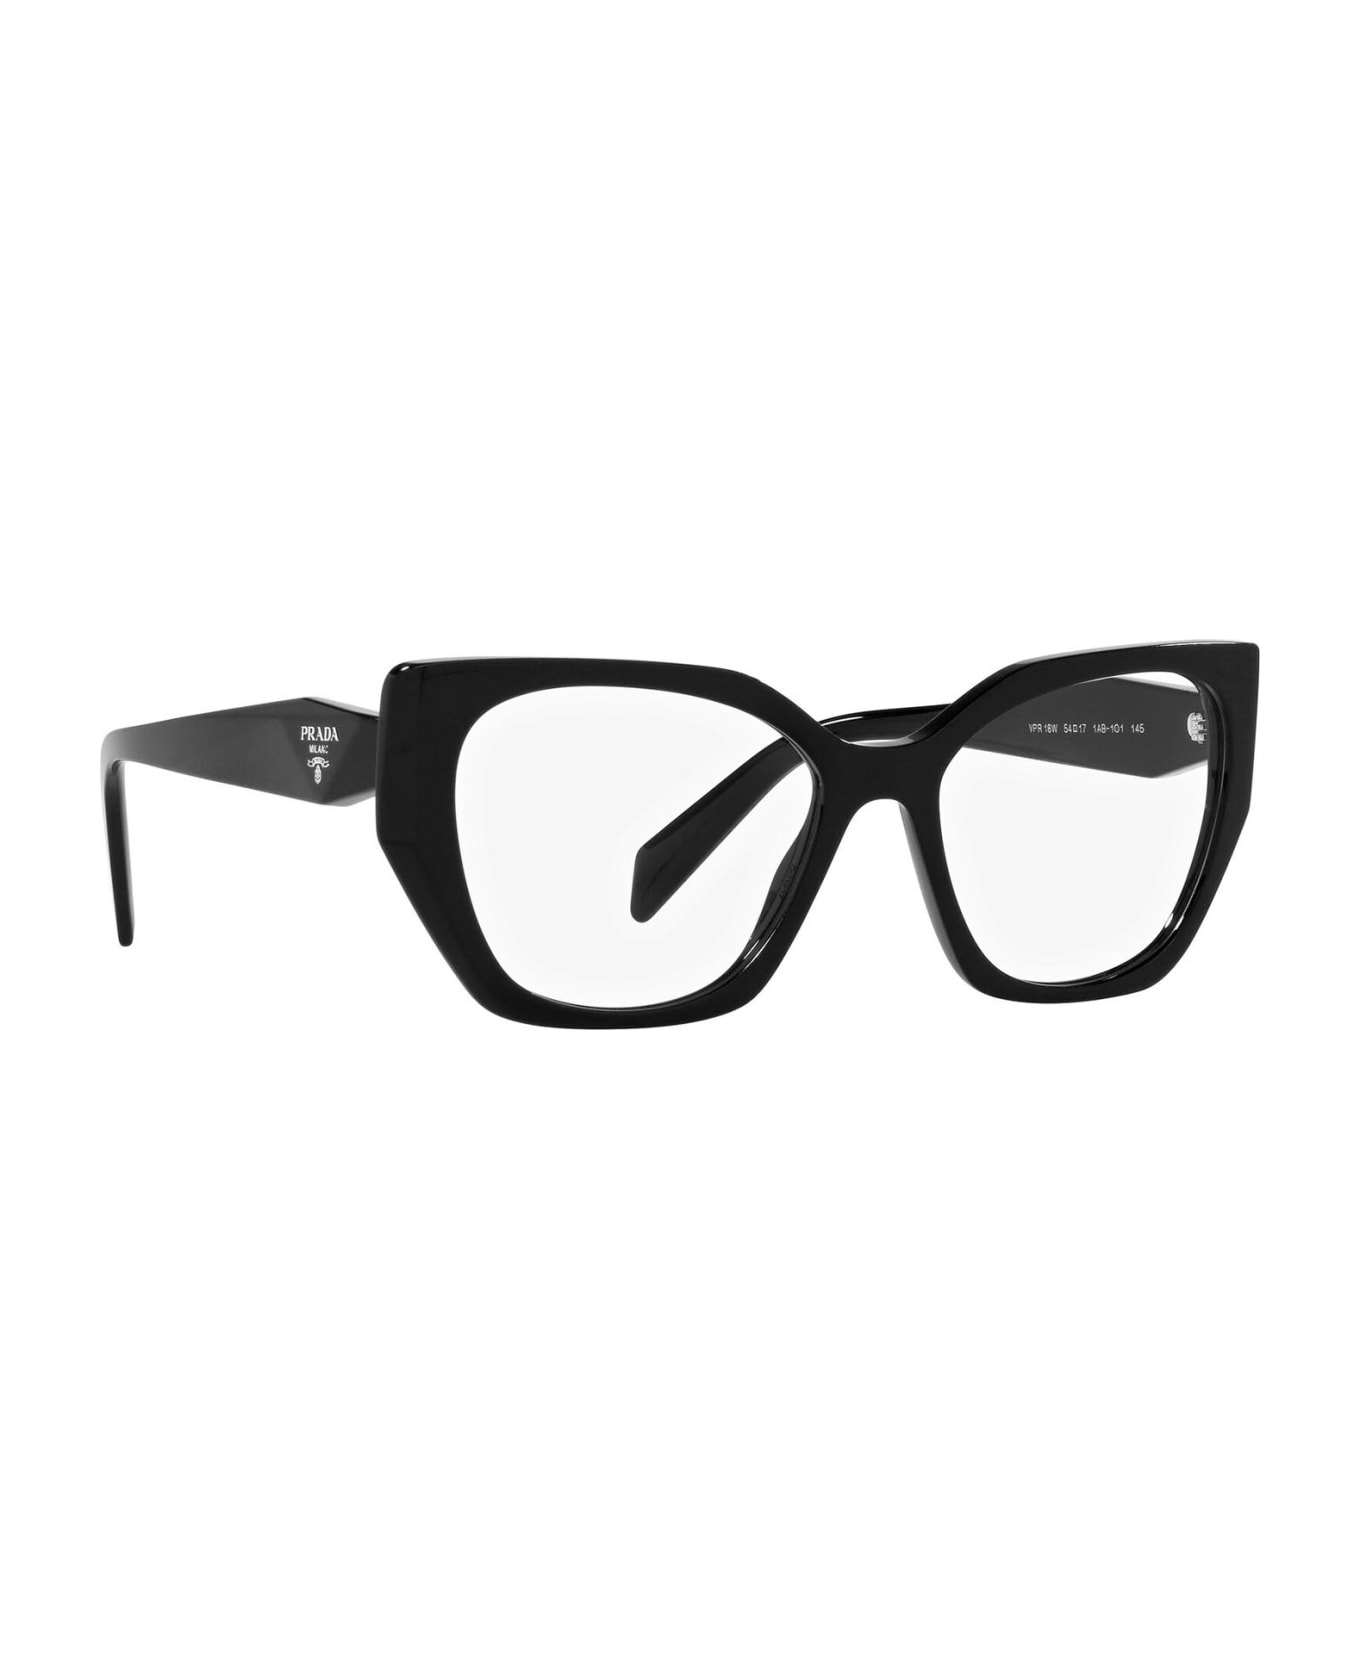 Prada Eyewear Pr 18wv Black Glasses - Black